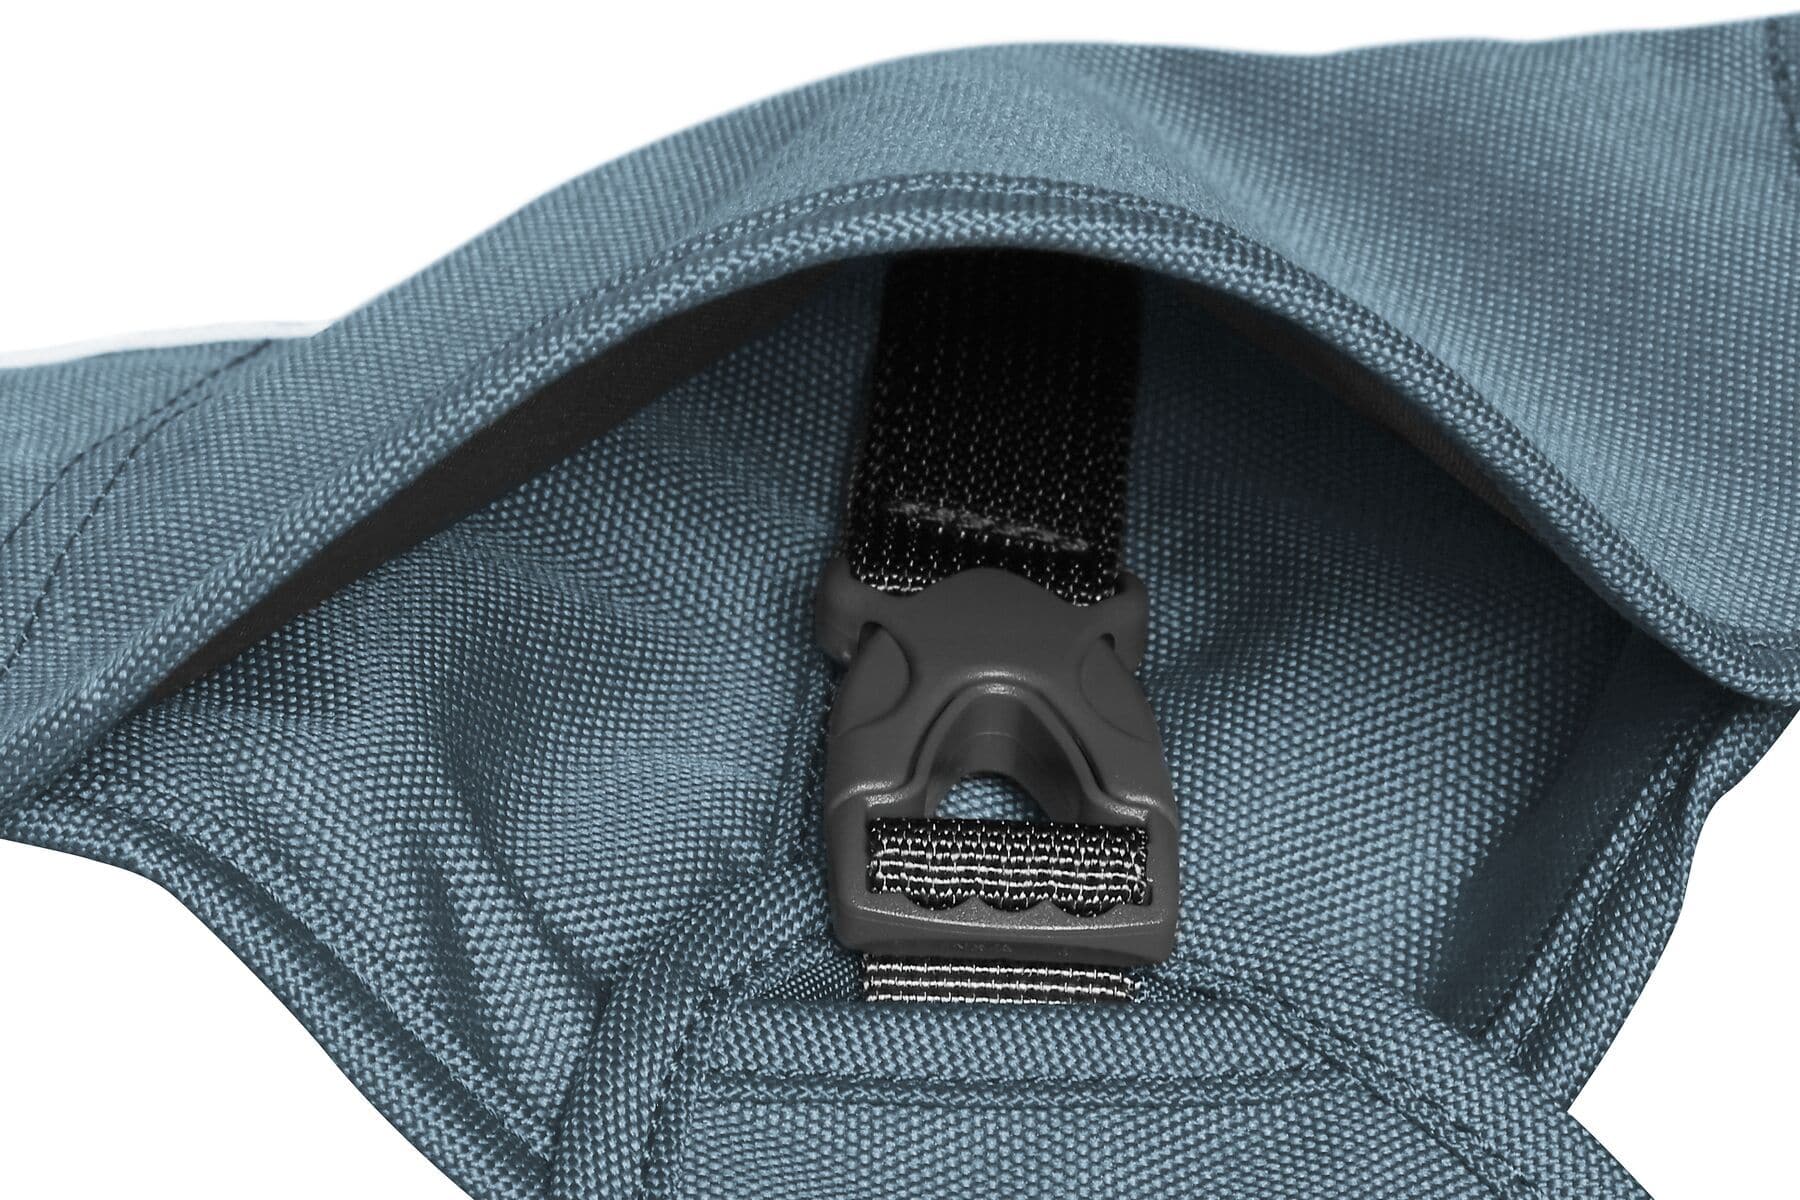 Abrigo para Perro K-9 Overcoat™ en Azul Piedra de Ruffwear®